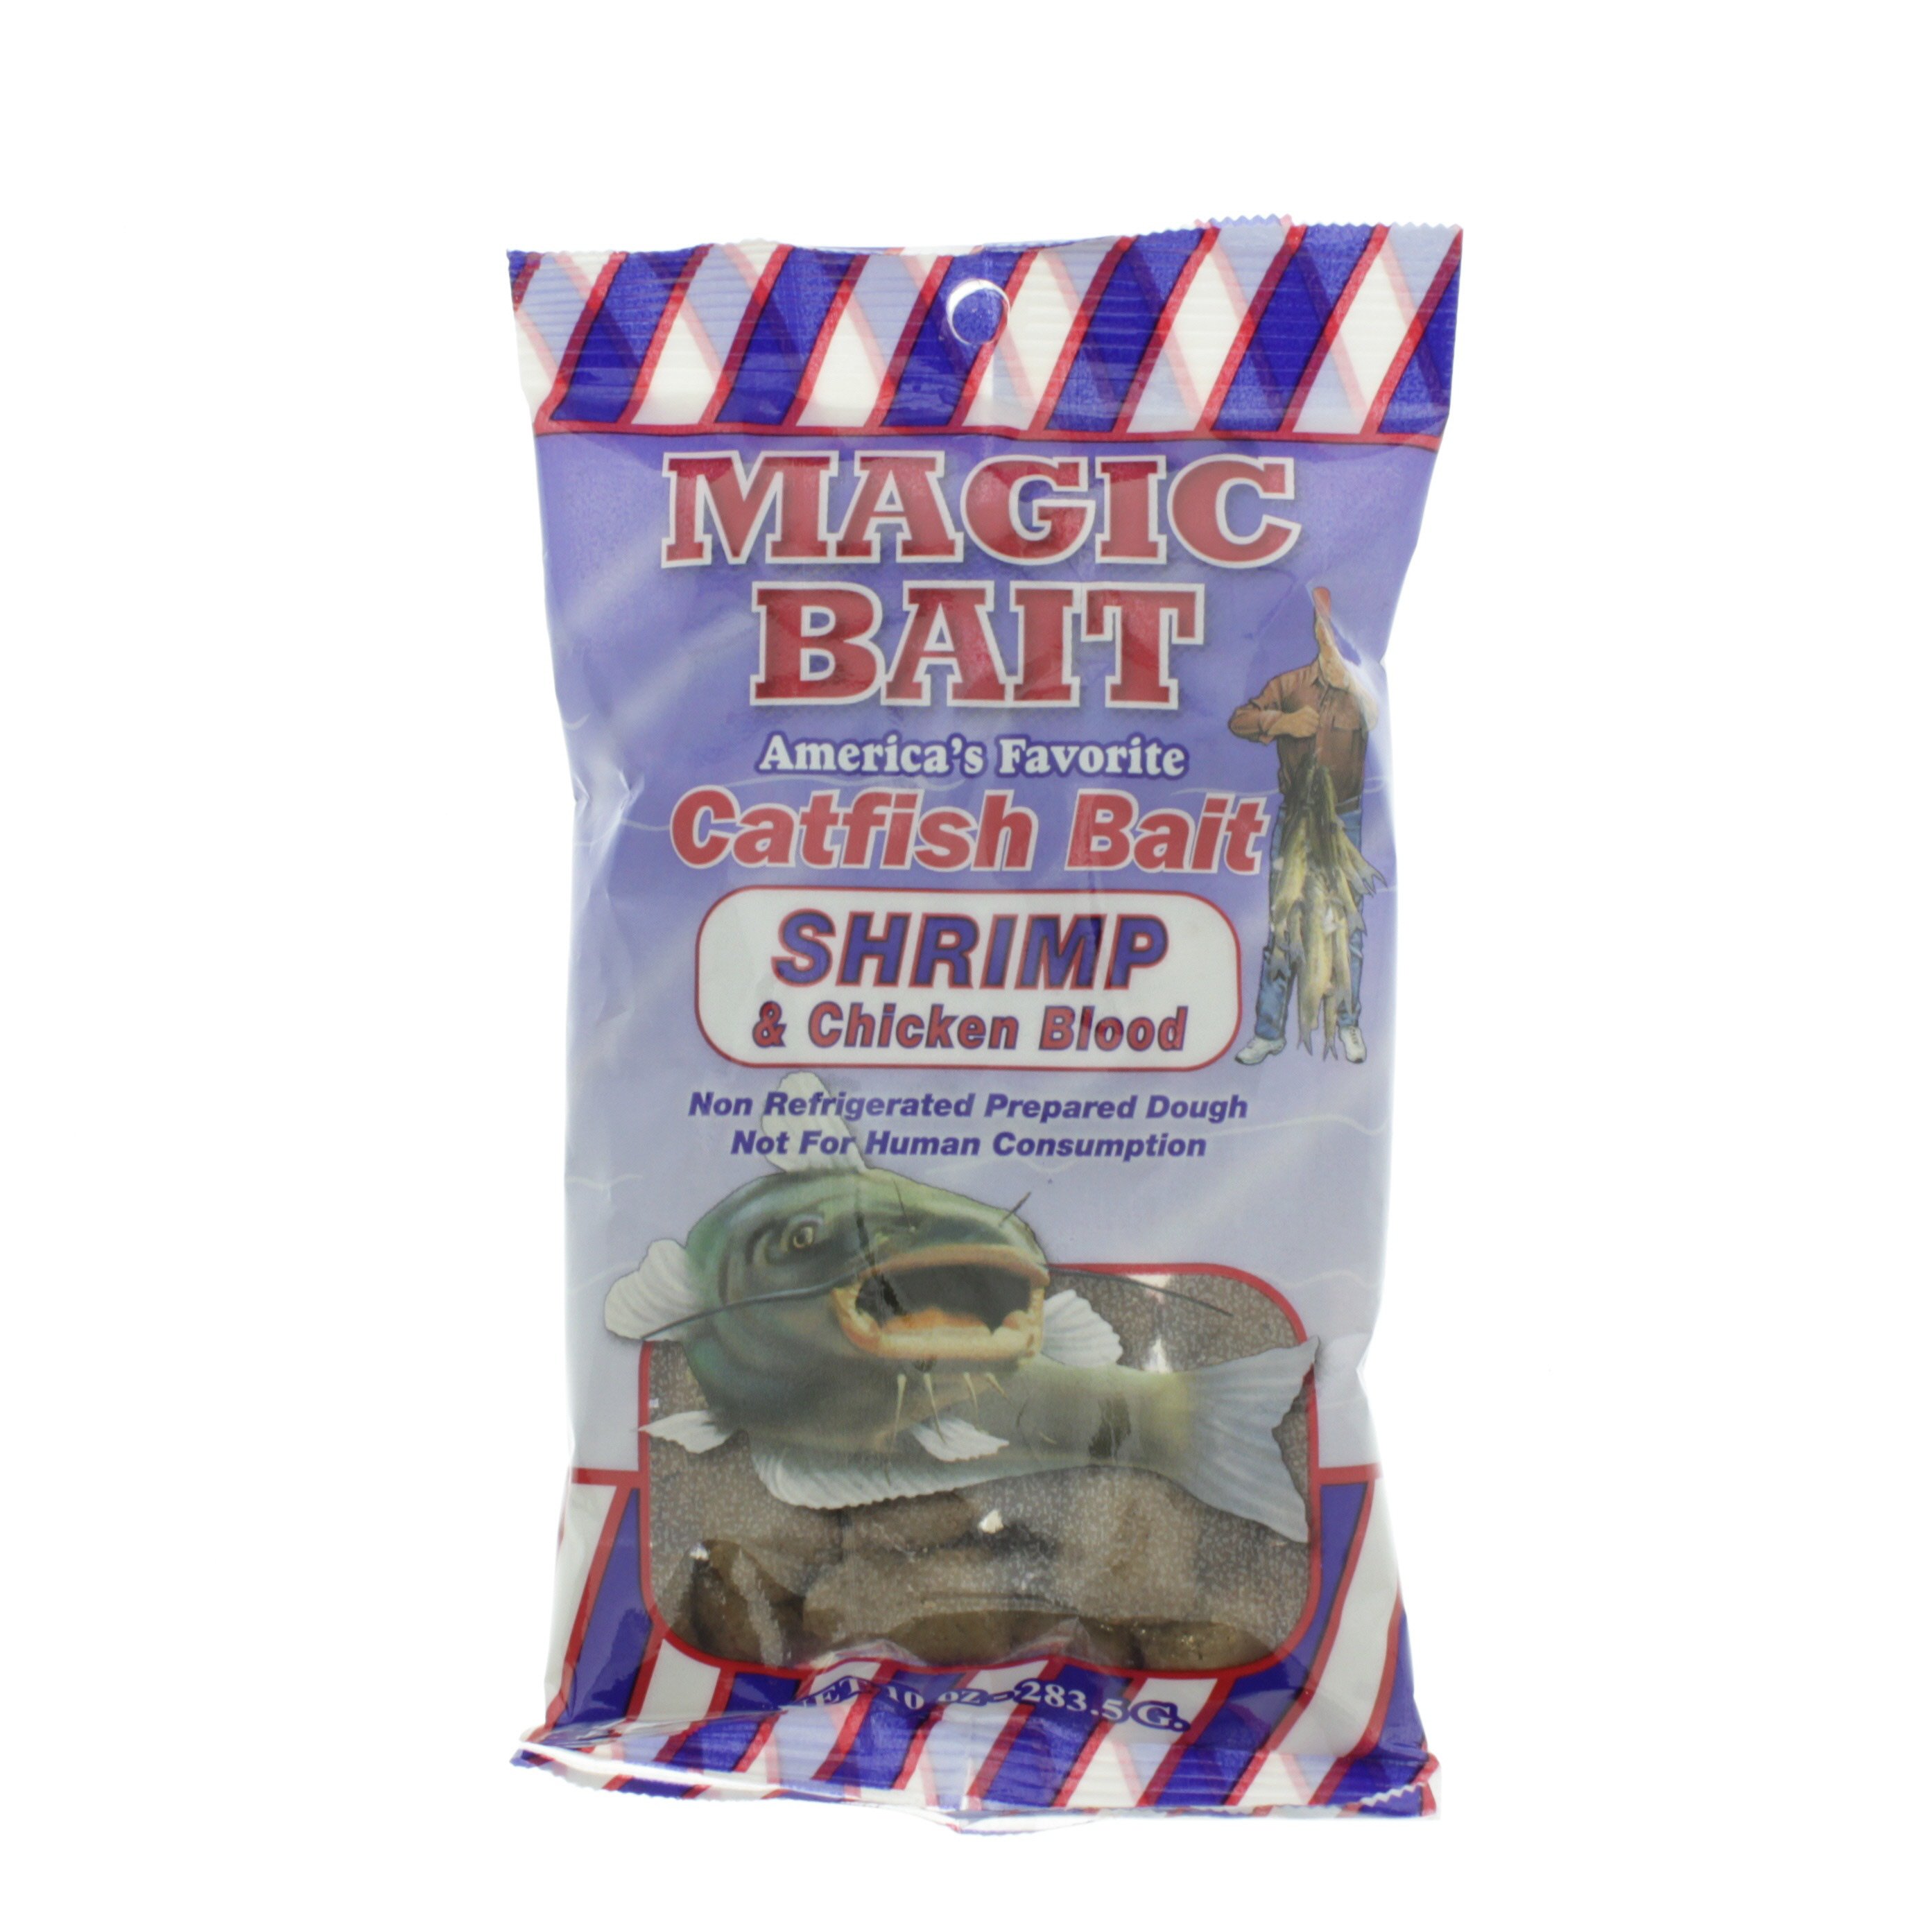 Magic Bait Shrimp & Chicken Blood Catfish Bait